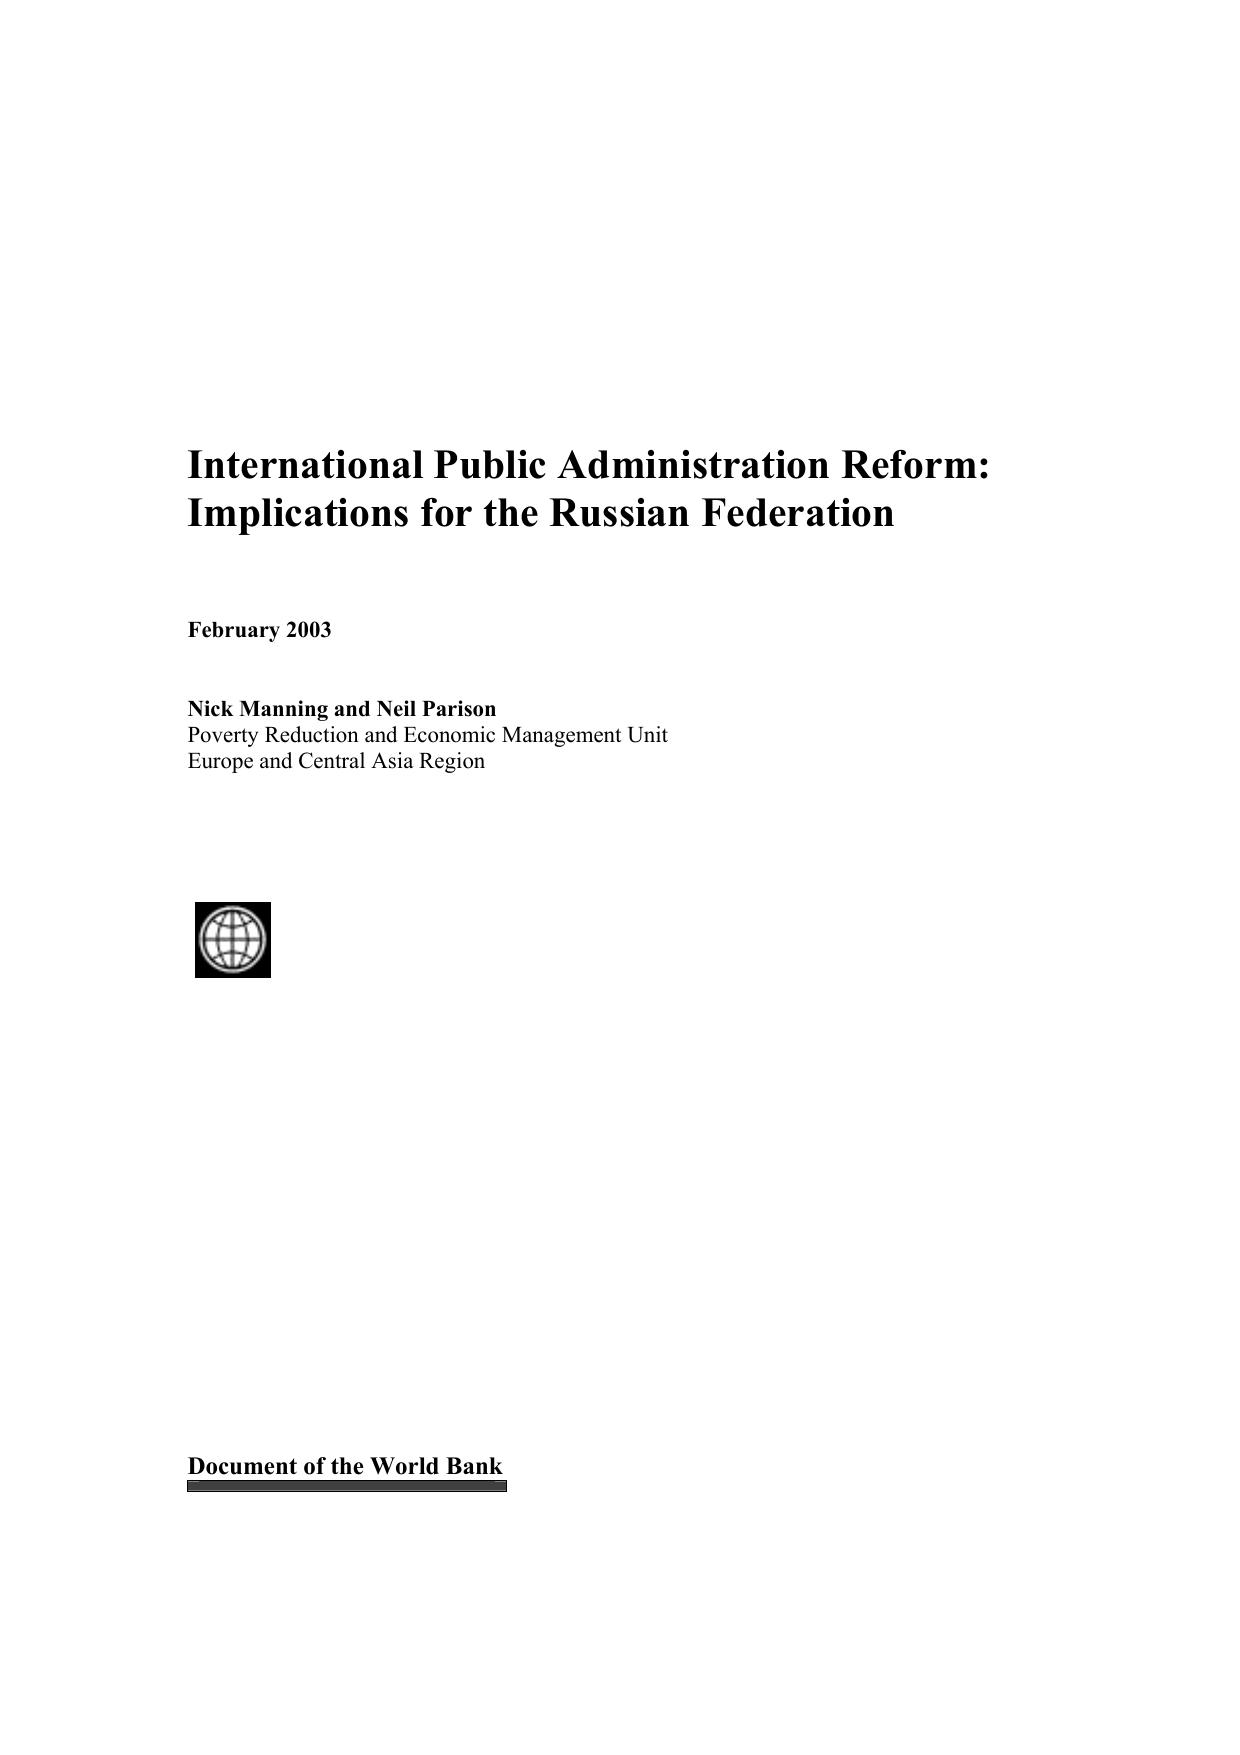 Microsoft Word - International Public Administration Reform.doc